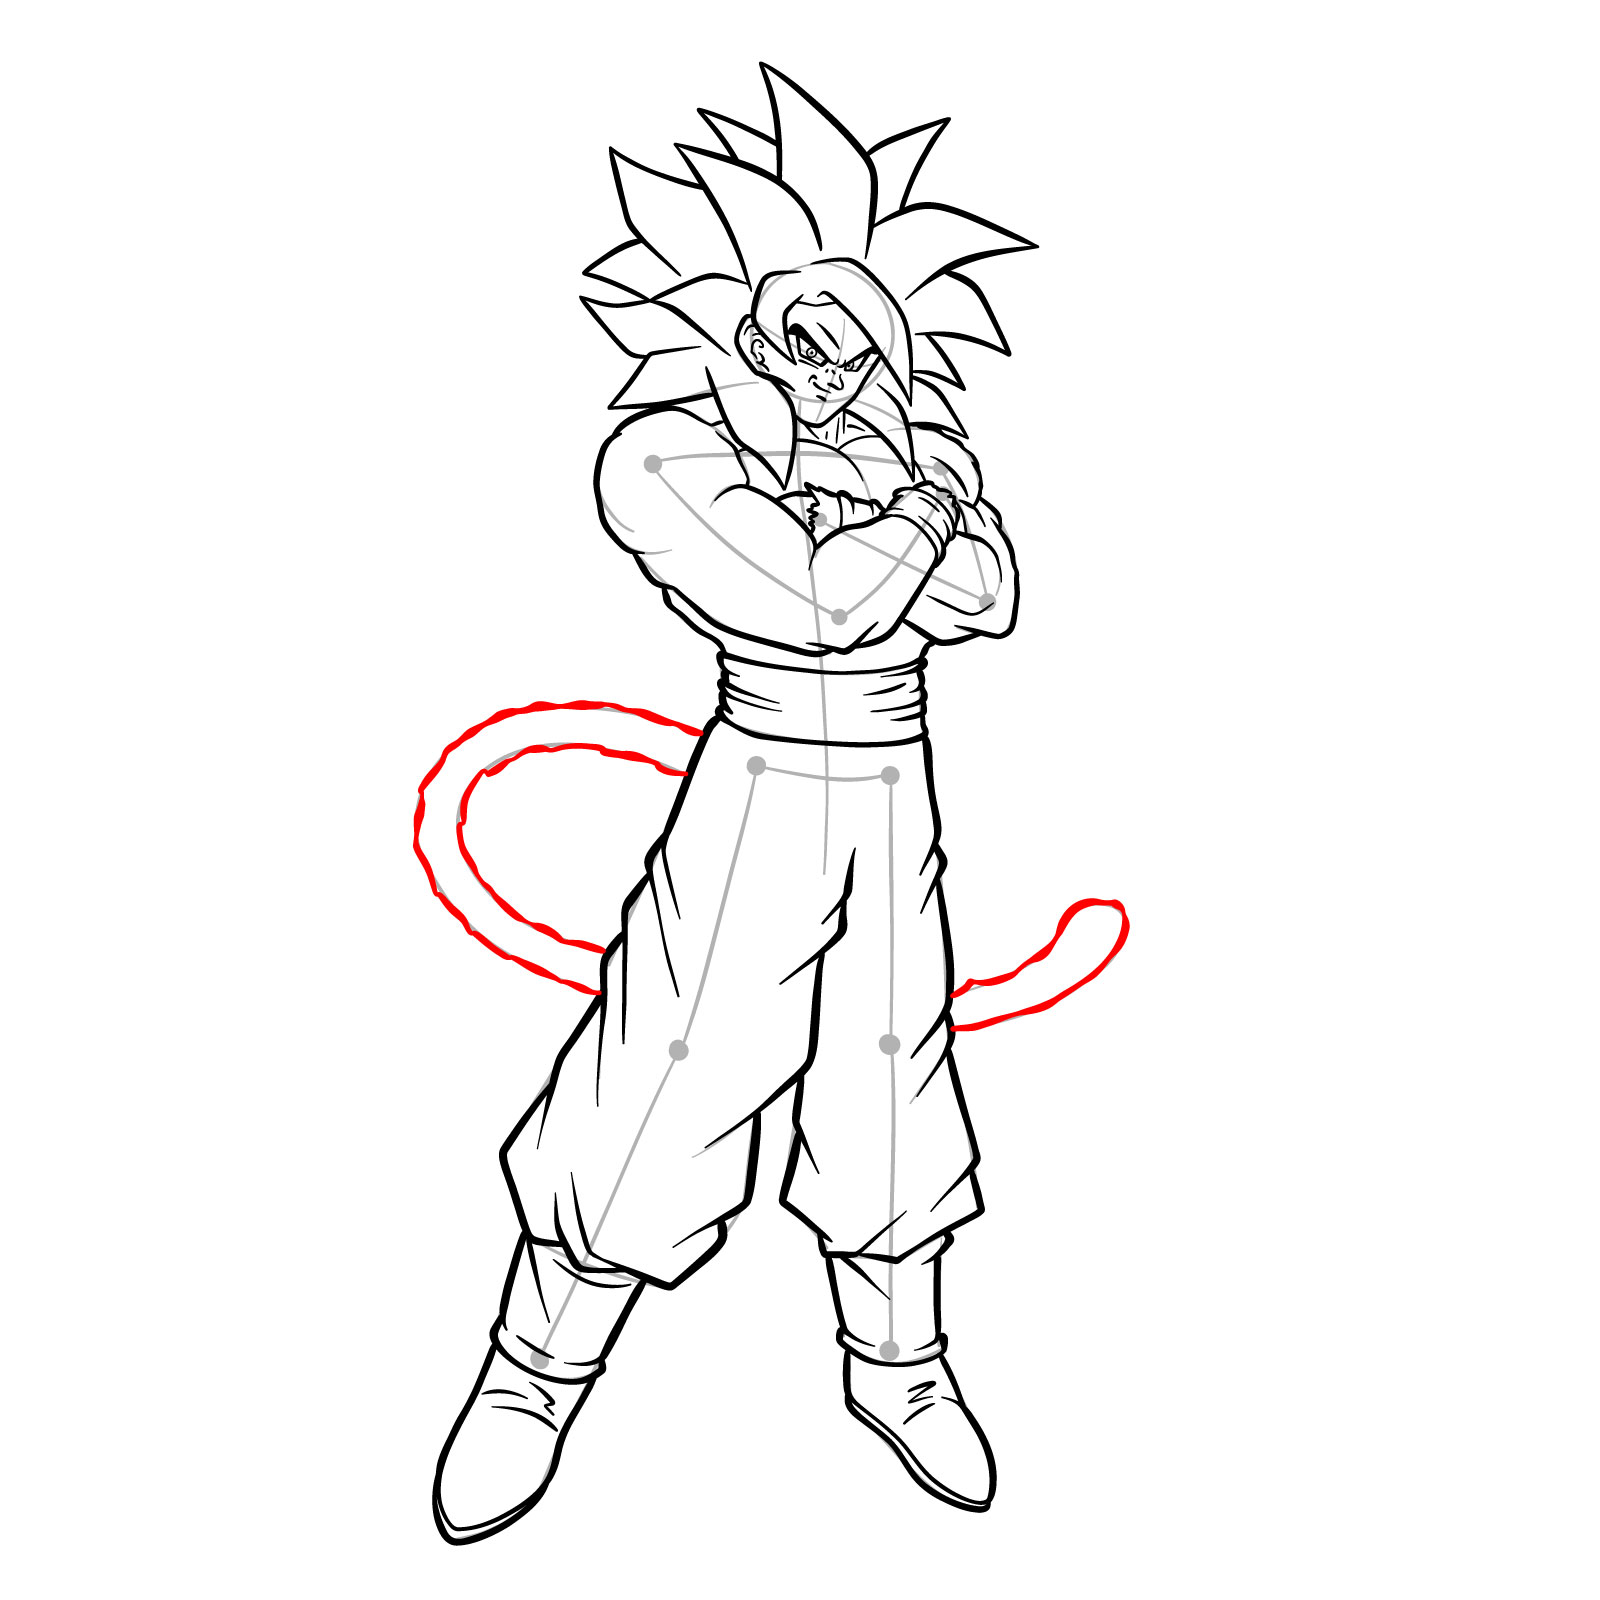 How to tát draw Goku Super Saiyan 4 - step 31